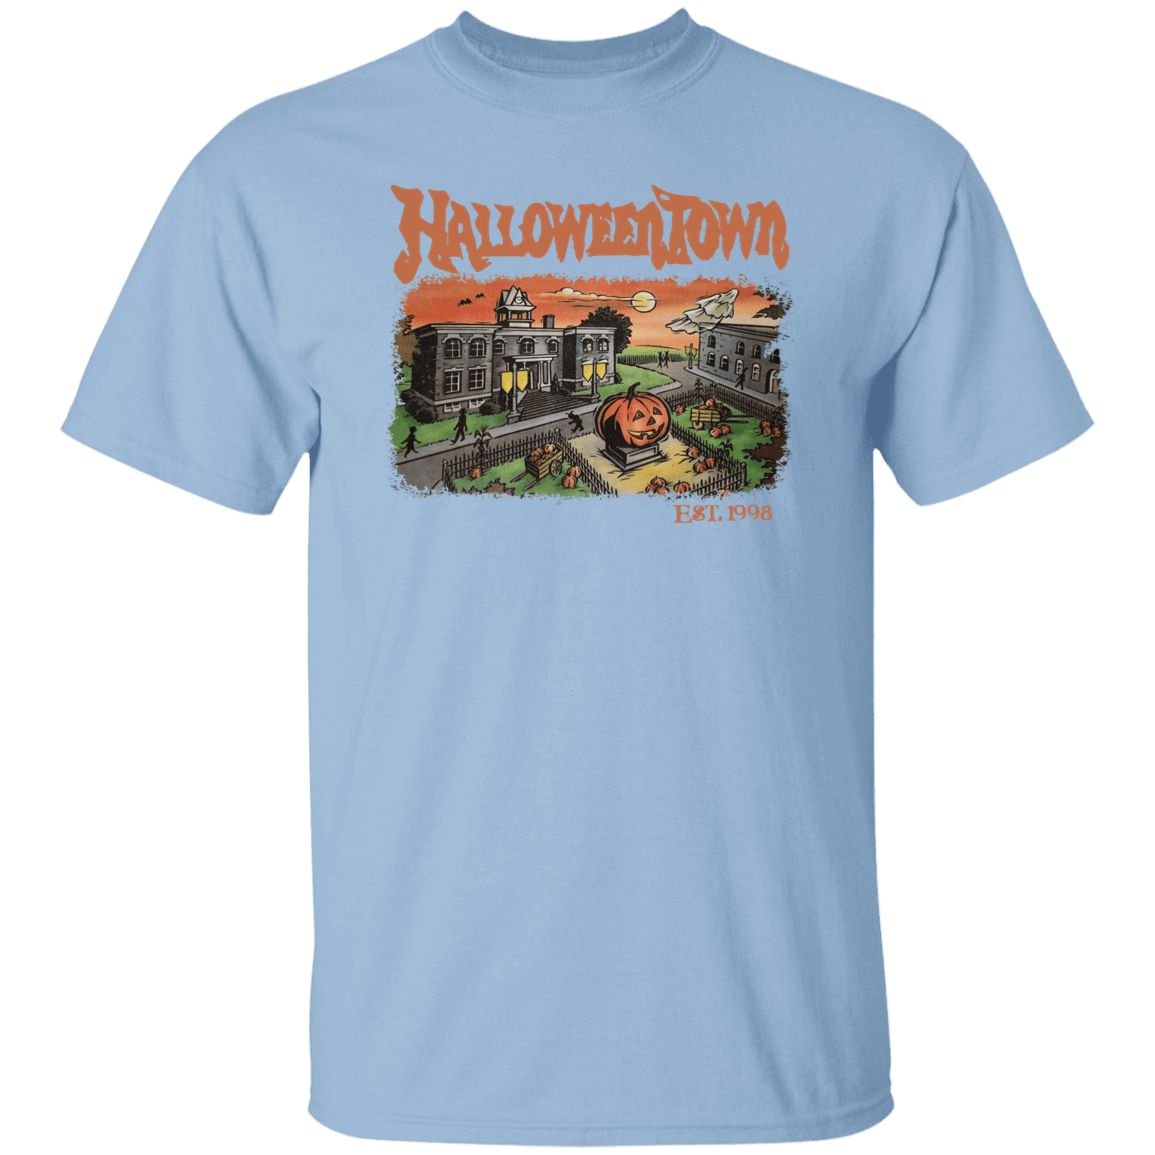 HalloweentownT-Shirt